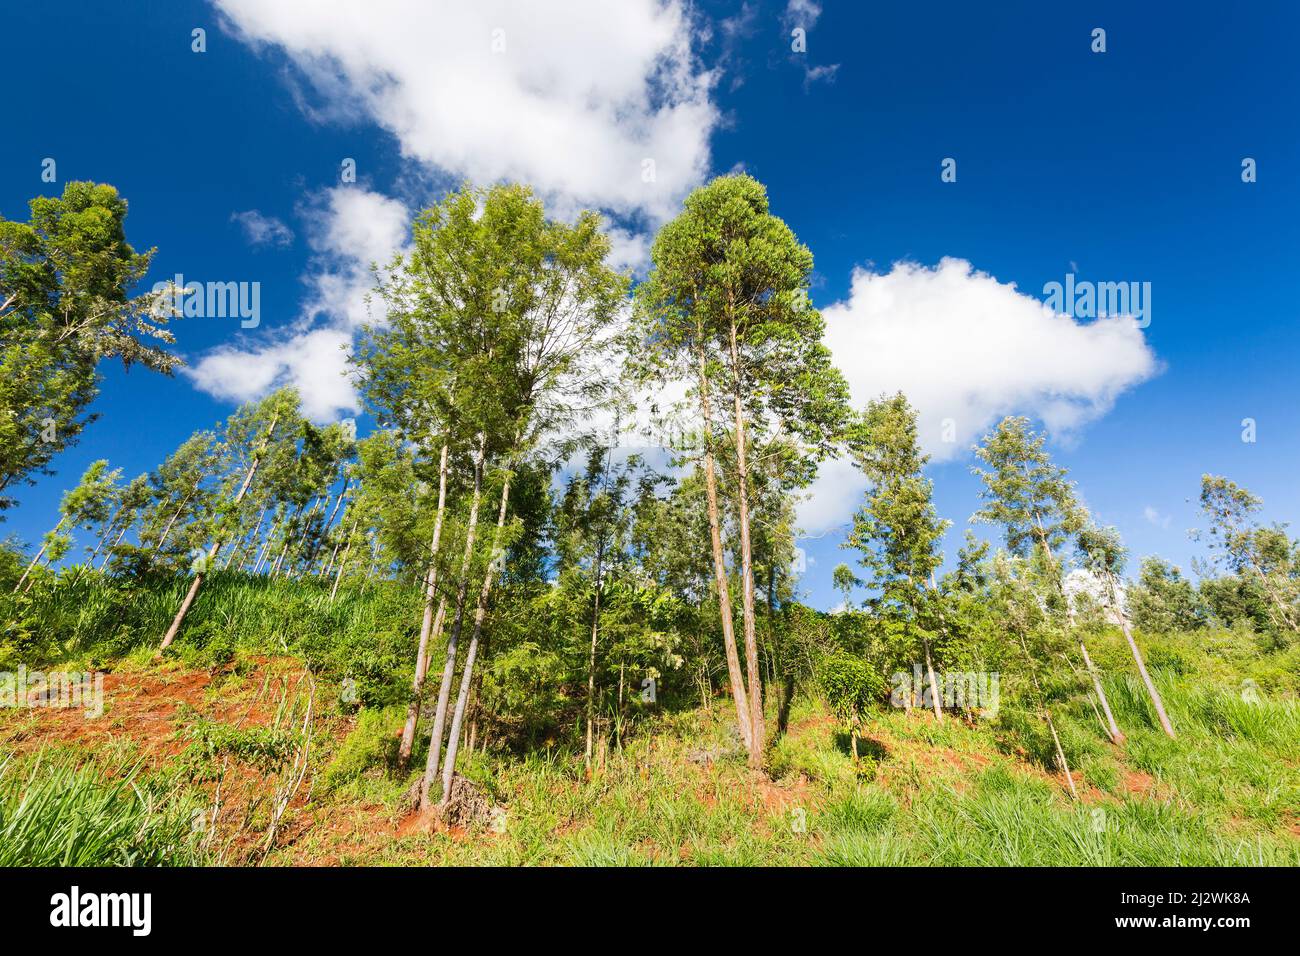 Napier Grass growing between trees in the Kiambu highland valleys, Kenya. Stock Photo